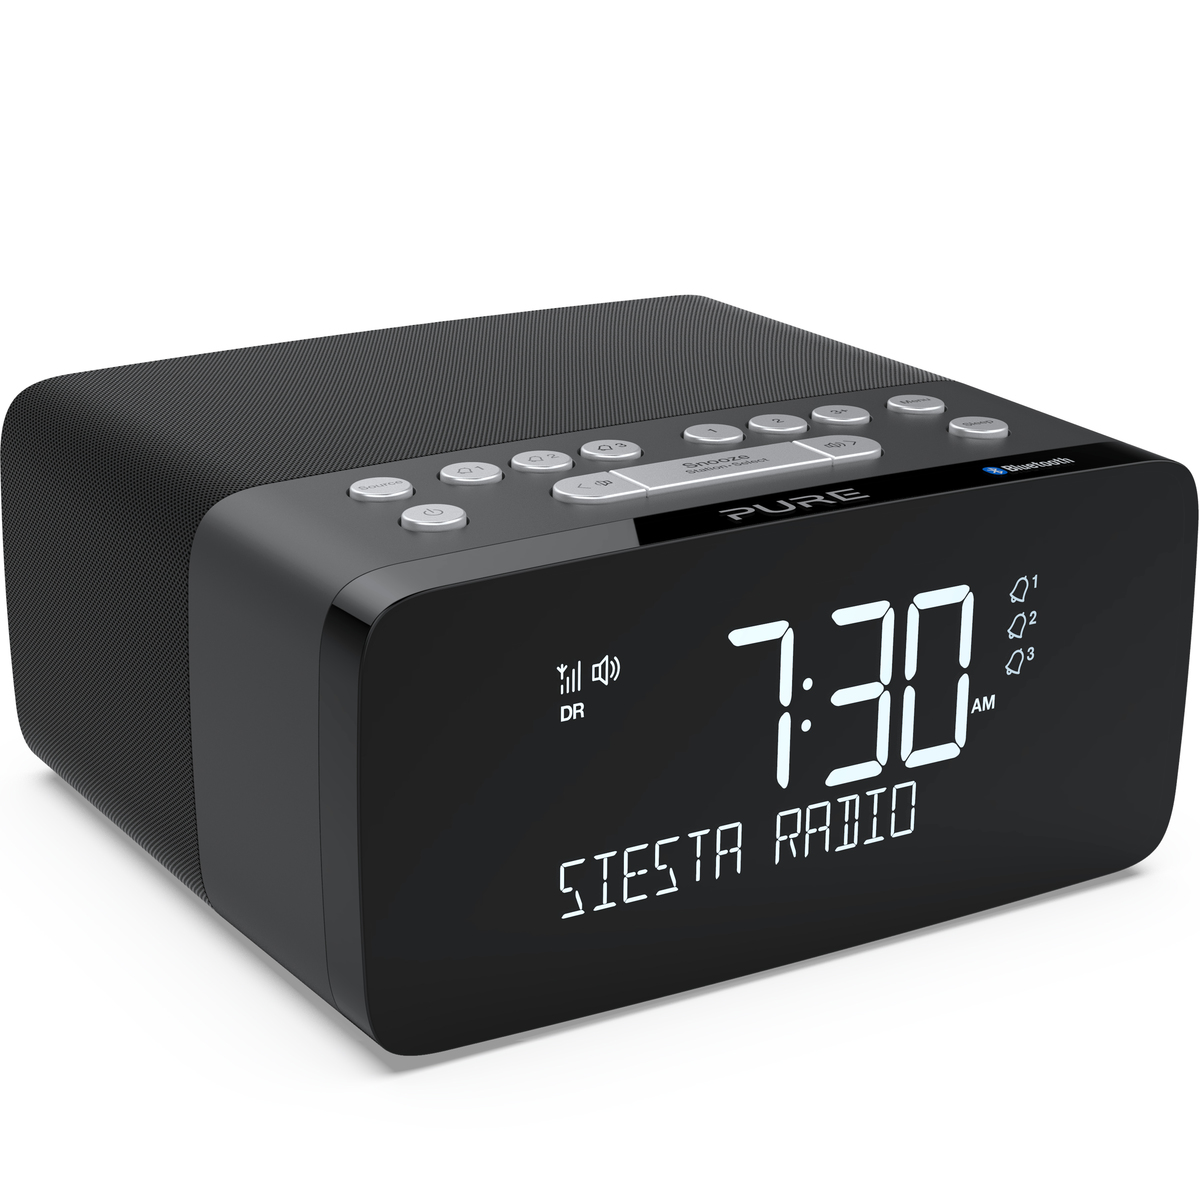 Siesta Charge, Graphite, EU/UK | Alarm Radios | Radios | Audio & HiFi | eleonto - Playground